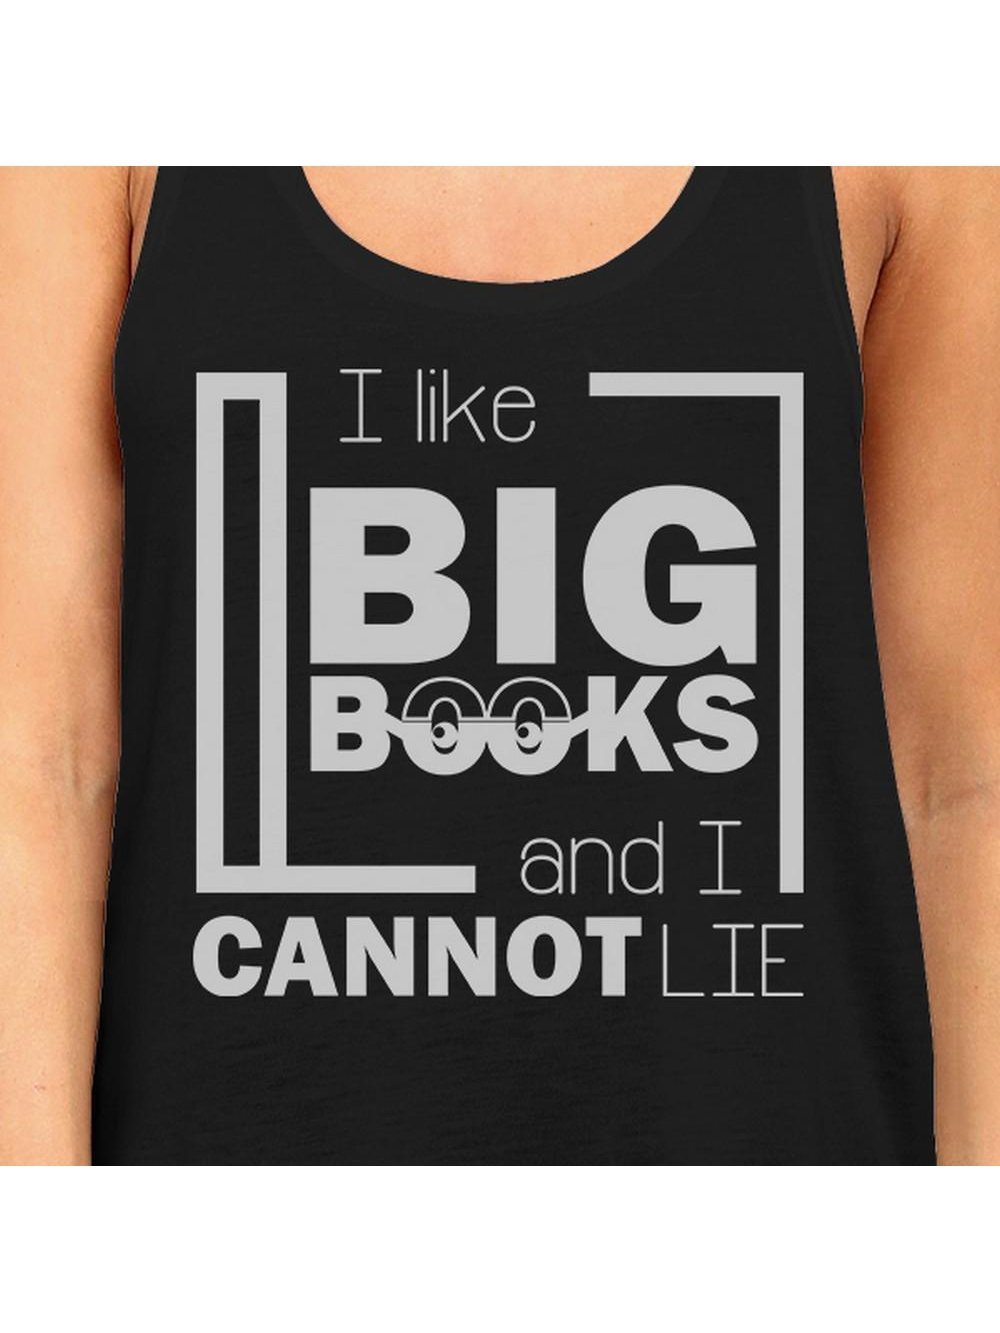 I Like Big Books Cannot Lie, Women's Black Tank Top, S-2XL - Tuma's Books